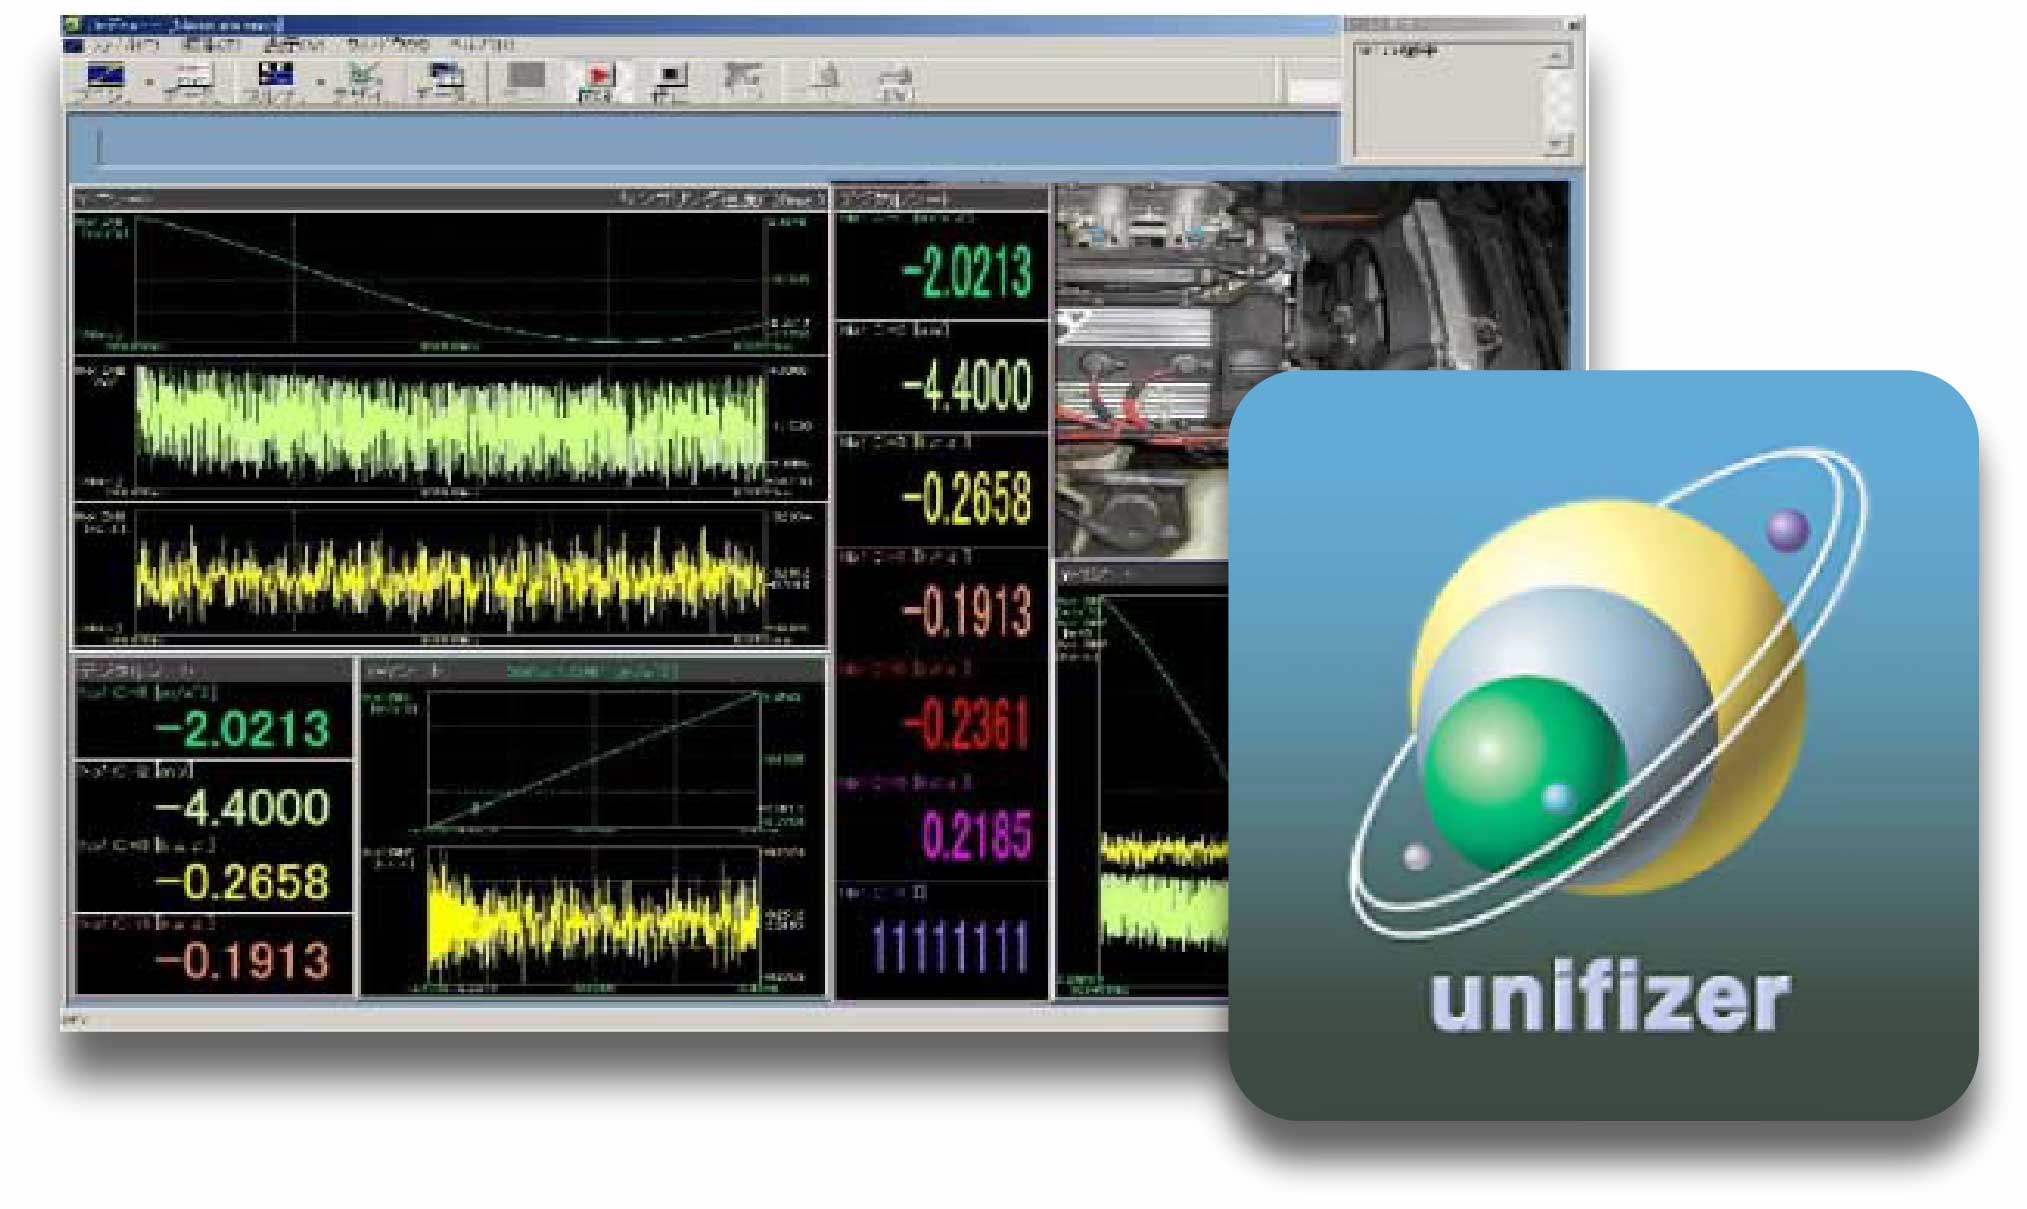 Unifizer NS3000 Platform Software for RA